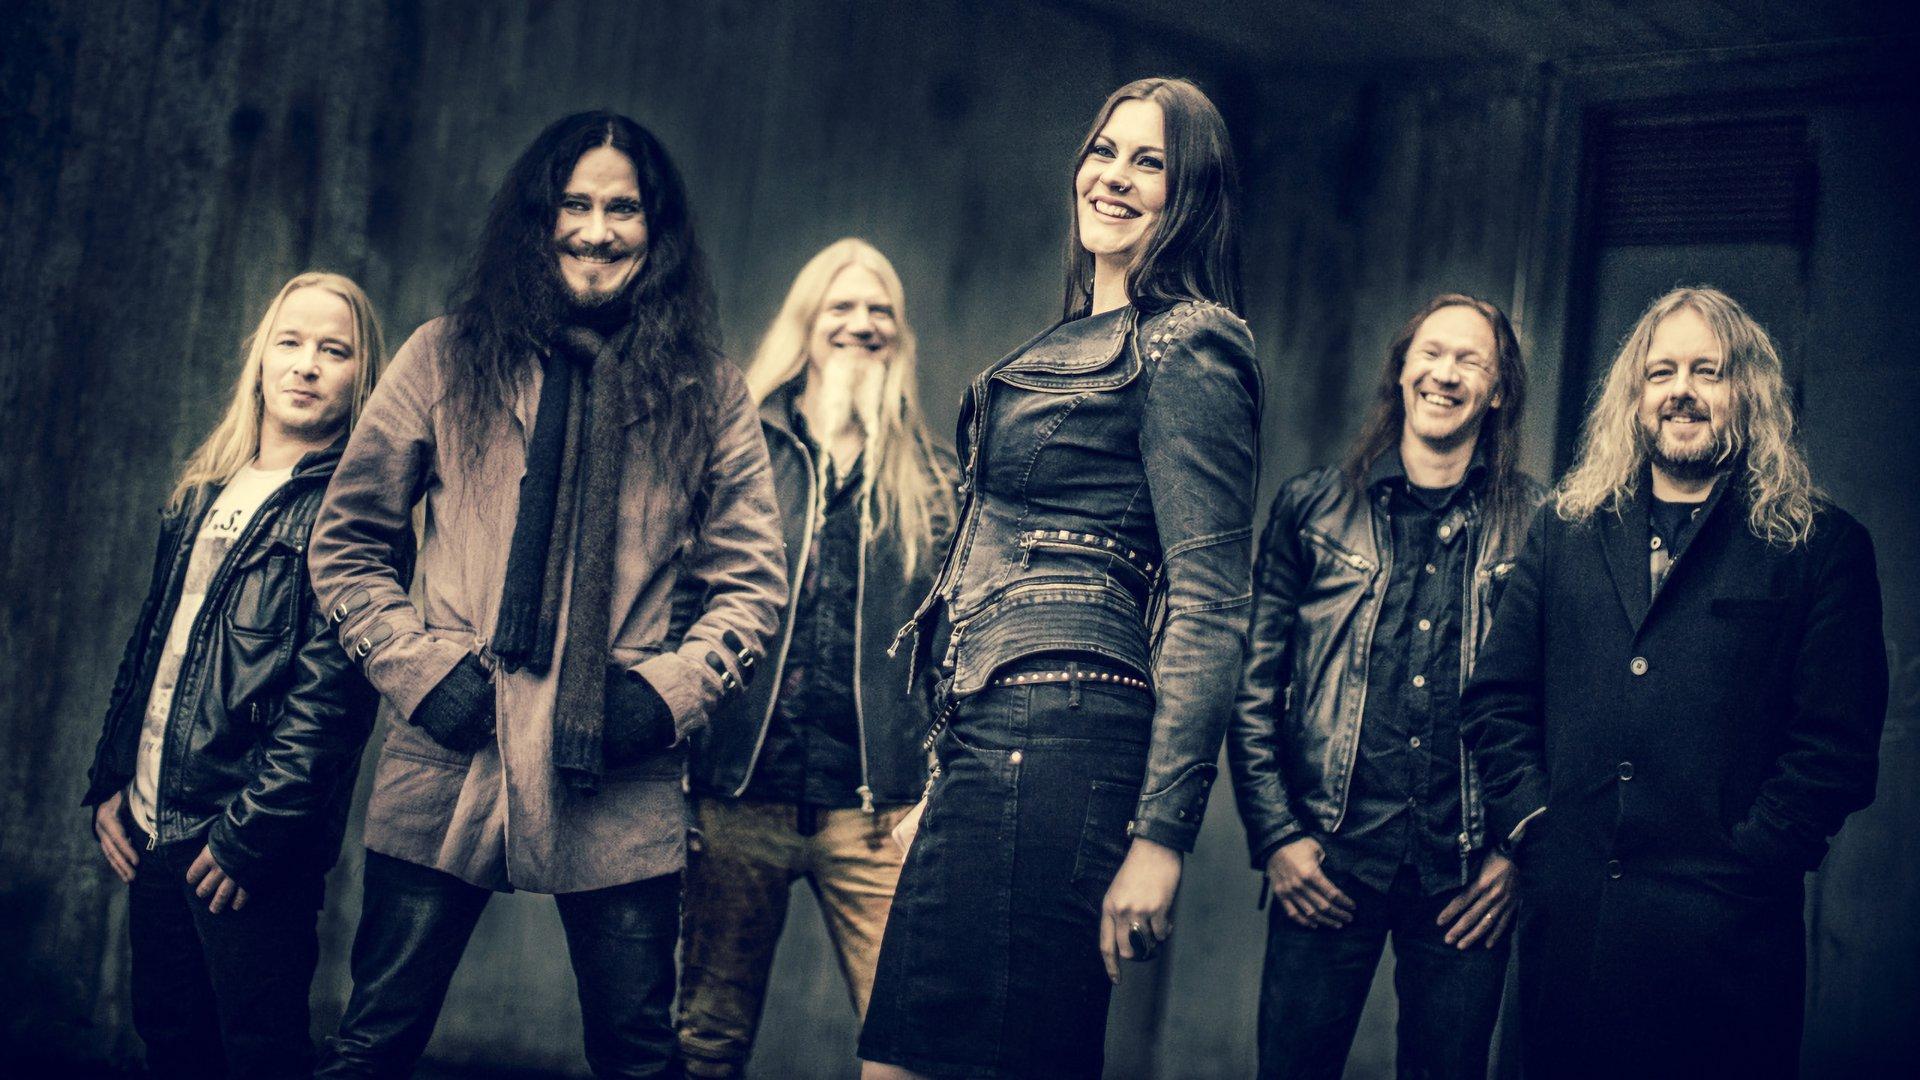 Метал группы финляндии. Группа Nightwish. Финская группа найтвиш. Группа Nightwish 2020. Группа найтвиш 2021.